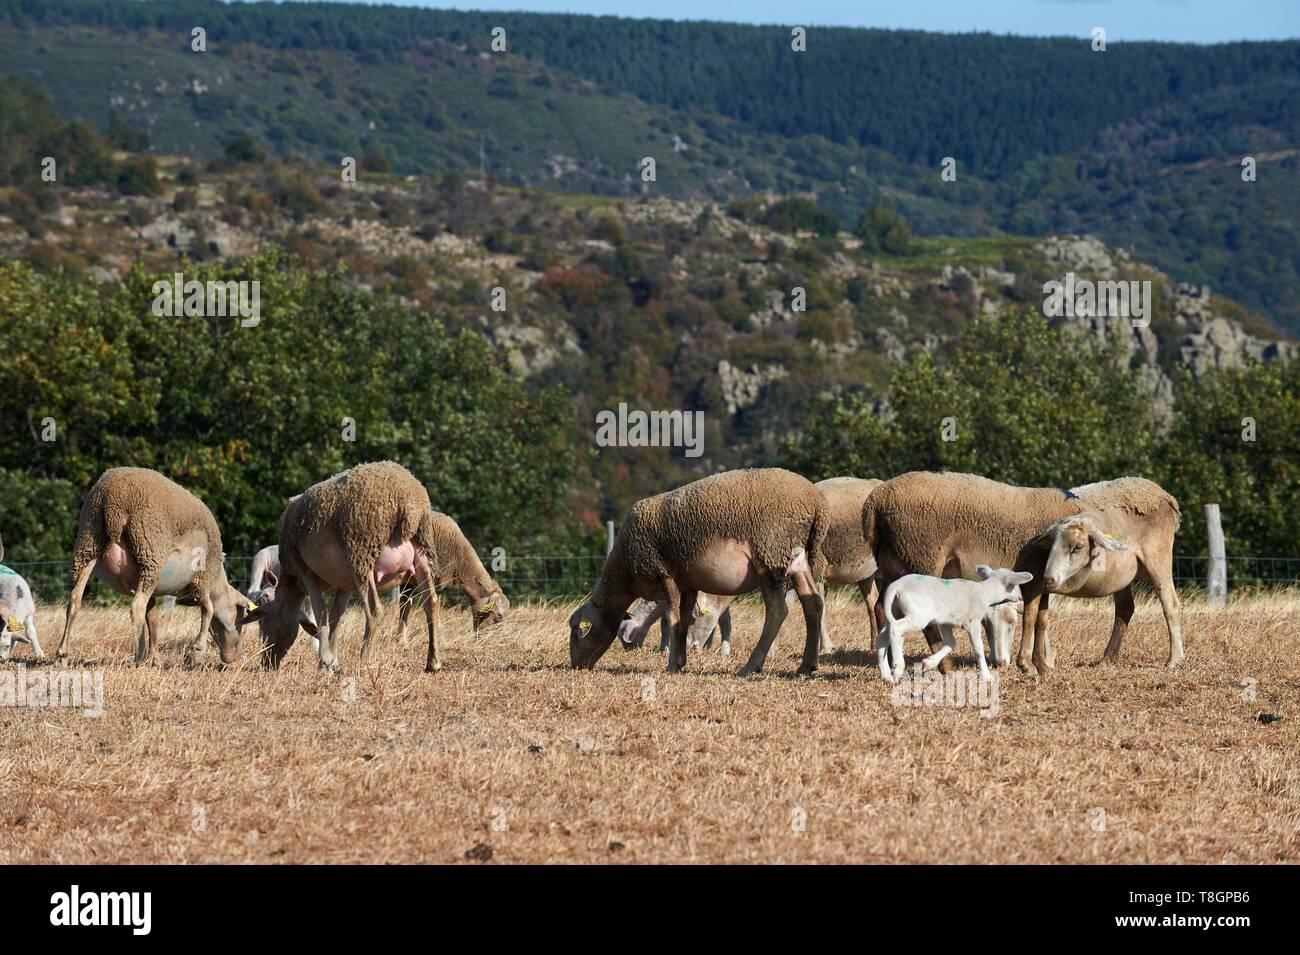 France, Lozere, Prevencheres, Hameau de la Beyssieres, Oliver Morin, Lozere Lamb Breeder Stock Photo